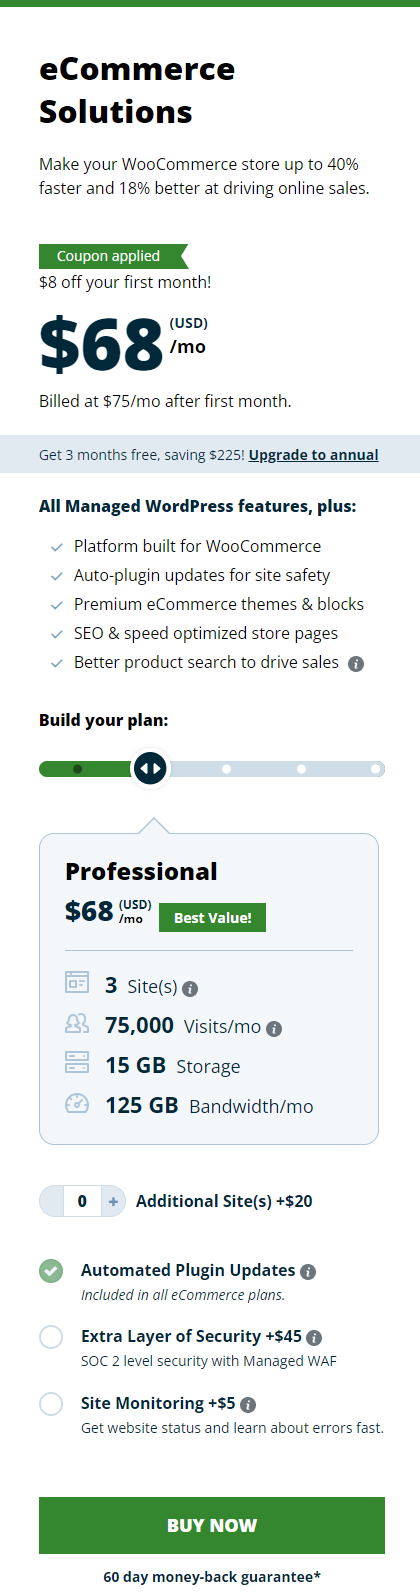 E-commerce - WordPress Hosting Startup Plan - $35 per Month [RJOVenturesInc.com]